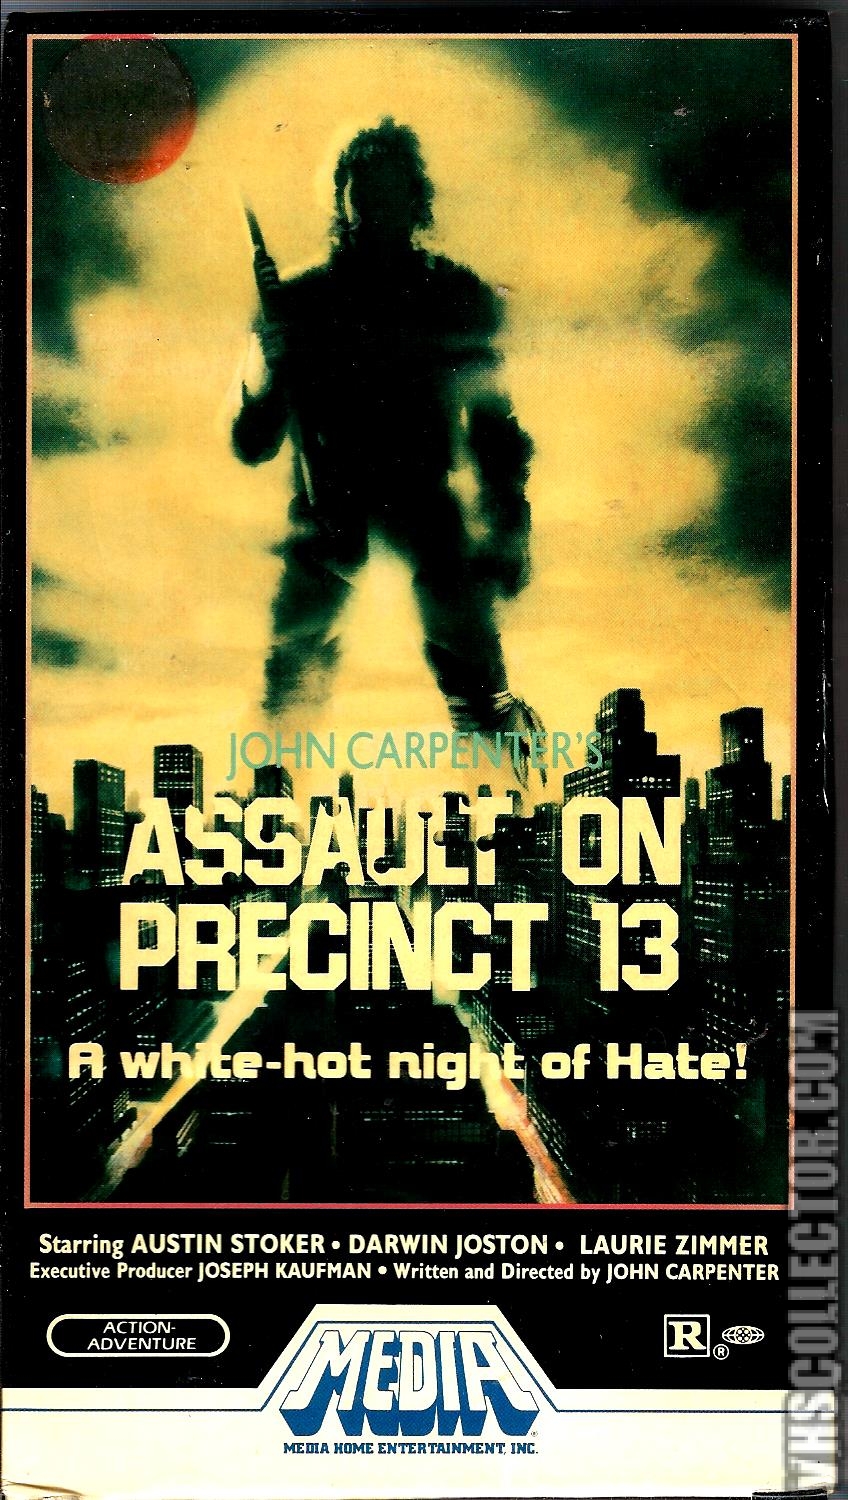 John Carpenter – John Carpenter's The End (Assault On Precinct 13